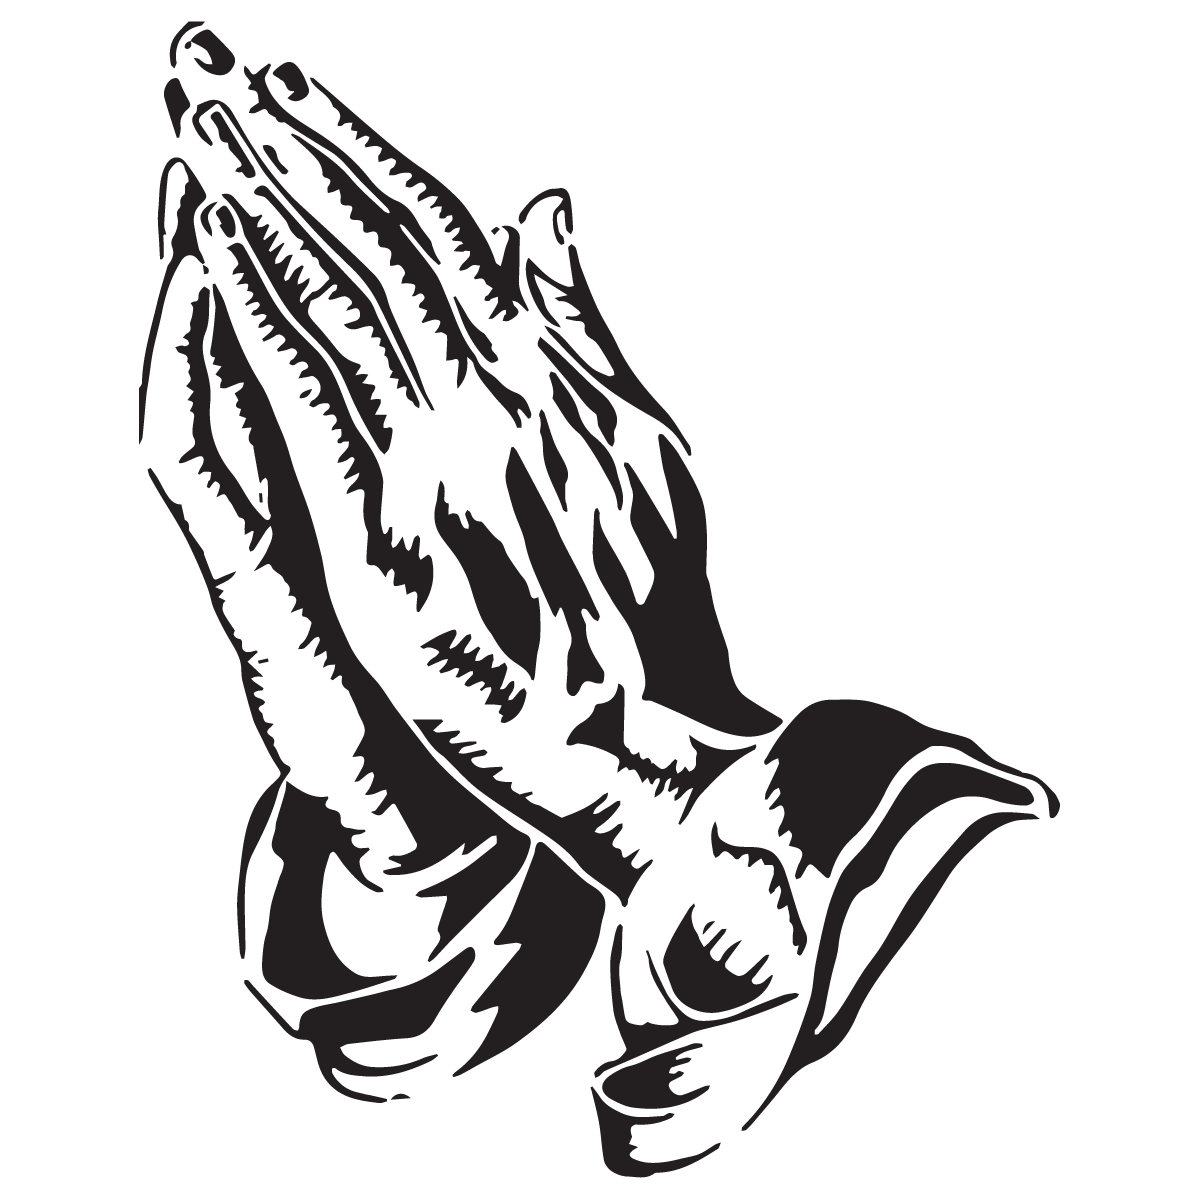 Praying Hands Prayer Religion Drawing Clip art - prayer png download ...